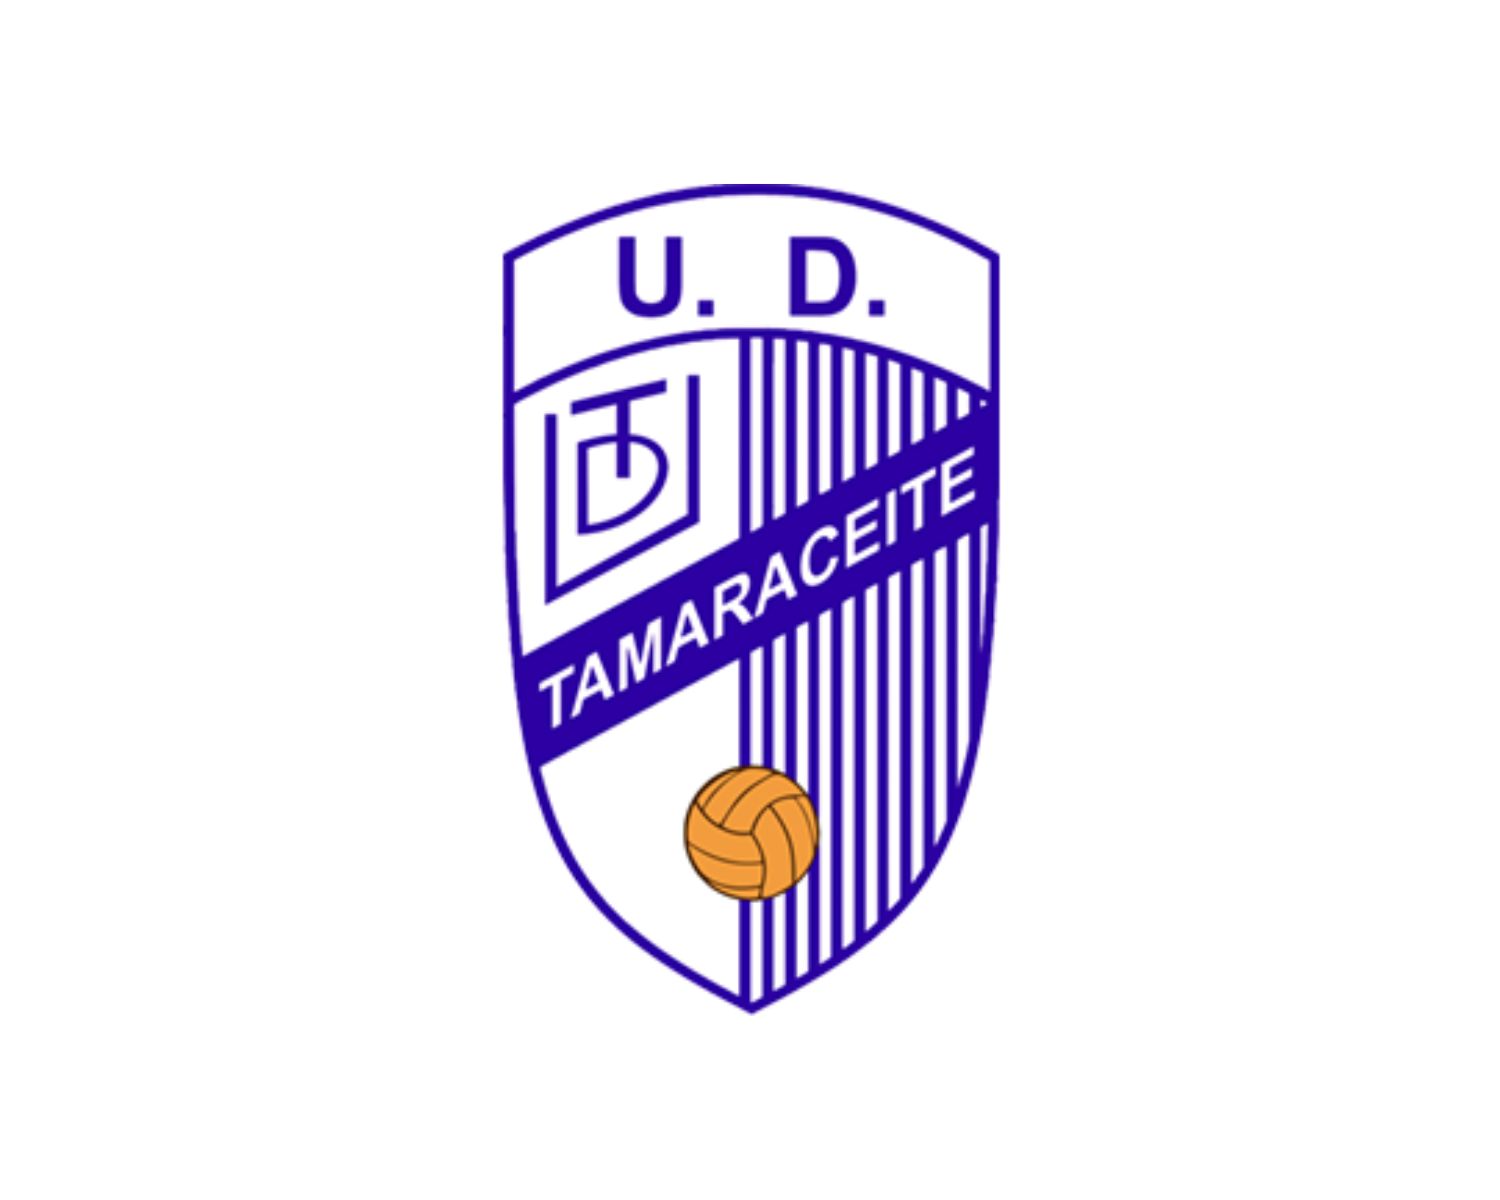 ud-tamaraceite-22-football-club-facts